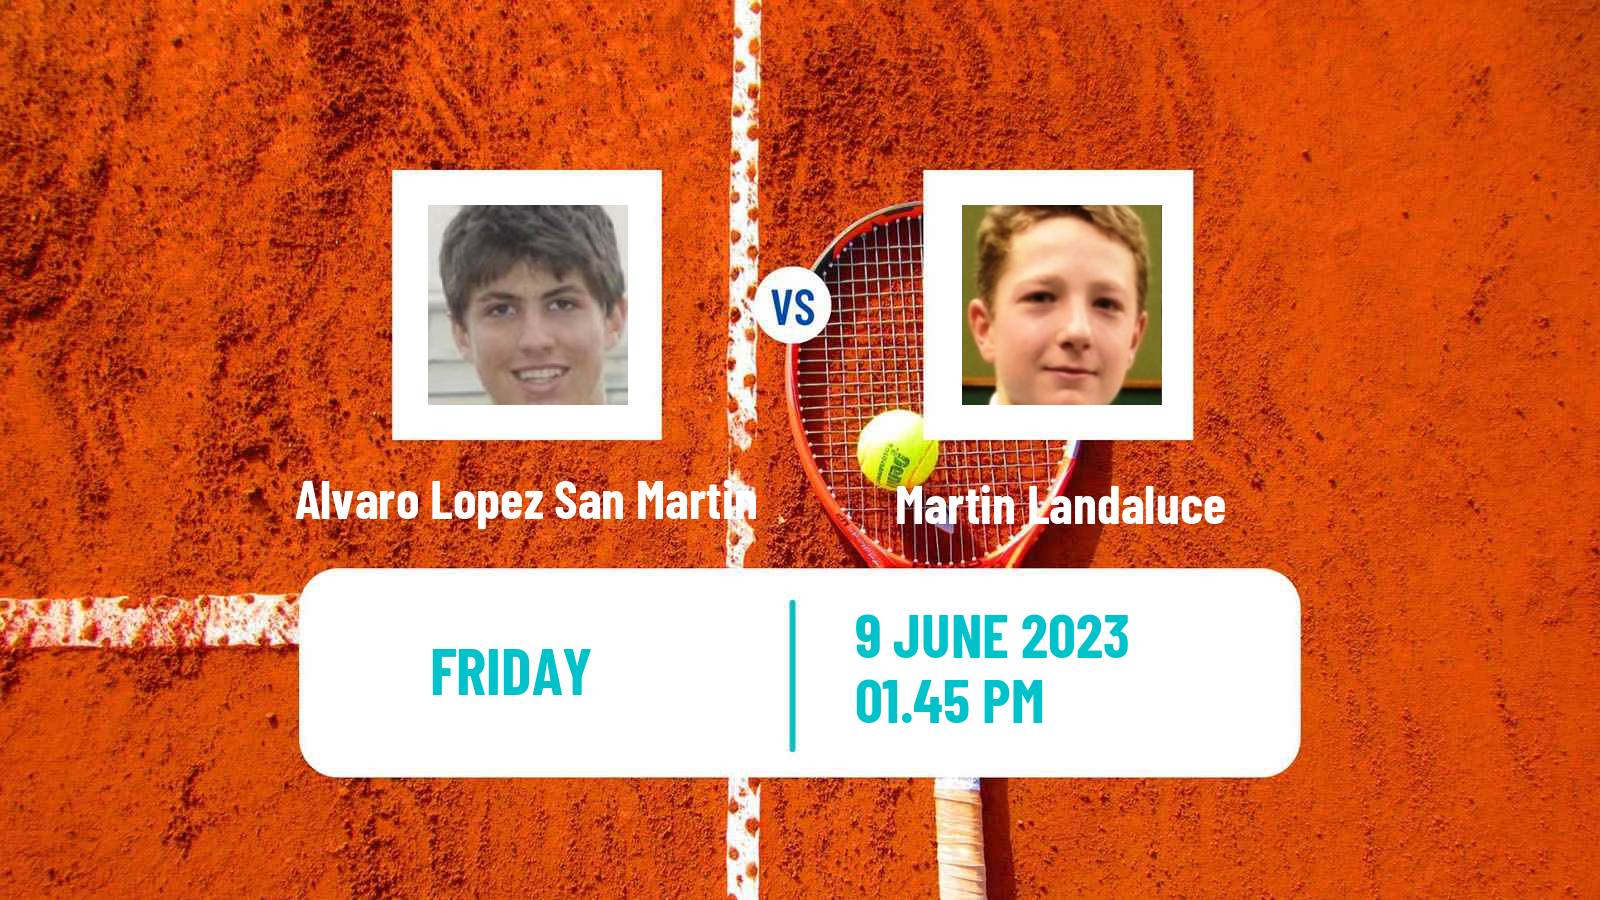 Tennis ITF M25 Cordoba Men Alvaro Lopez San Martin - Martin Landaluce